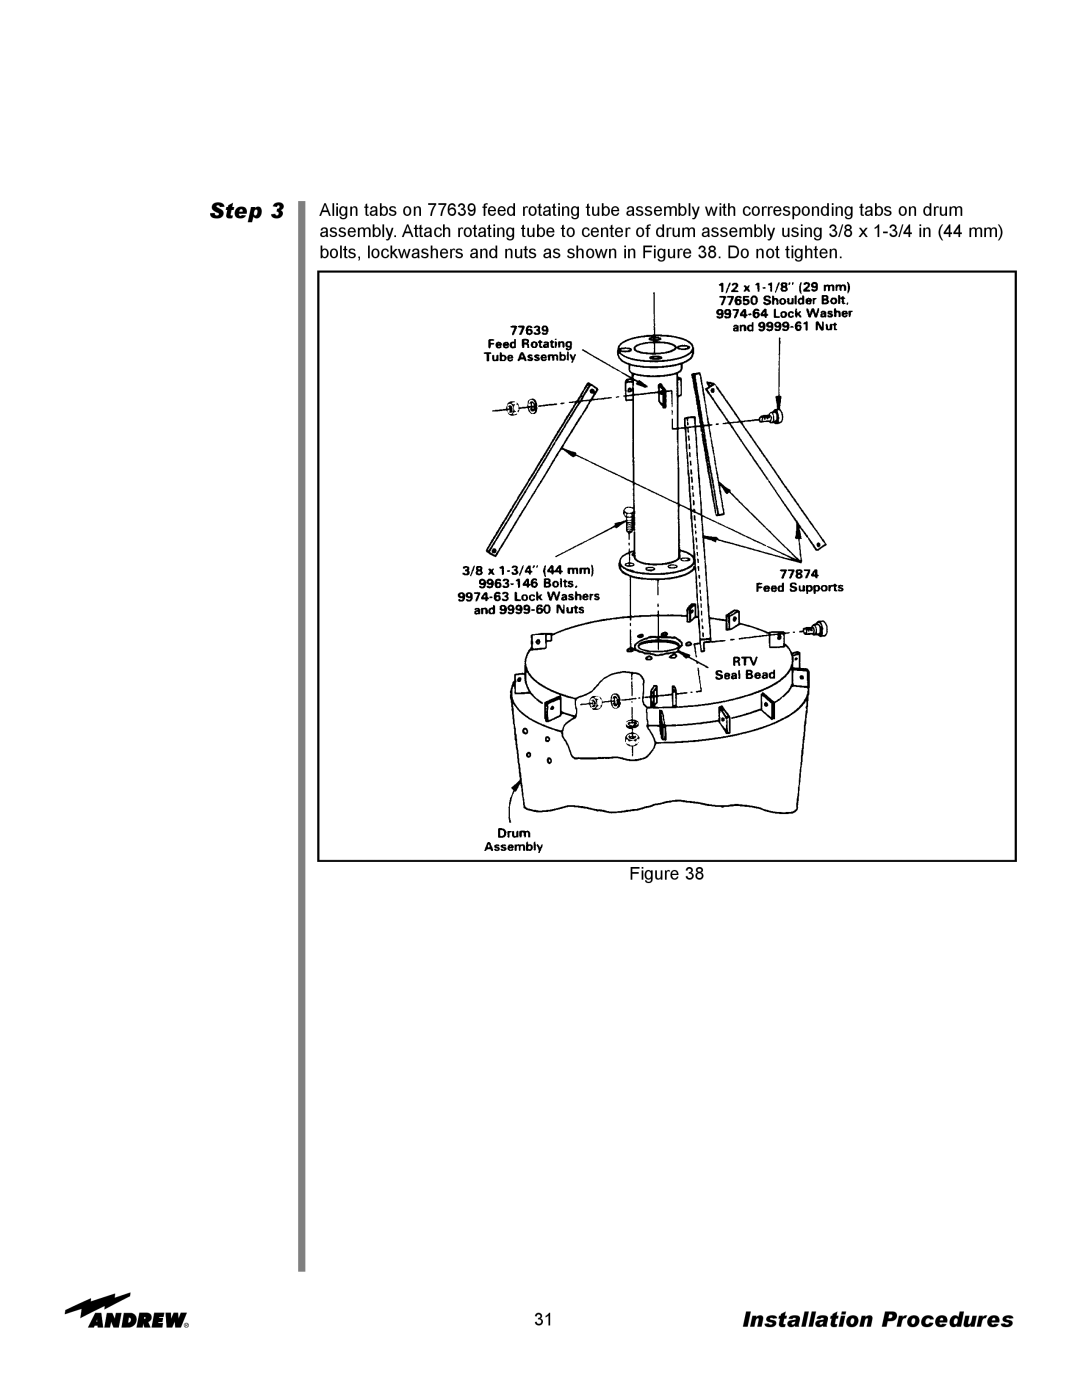 Andrew ES73 manual Step, Installation Procedures, Figure 